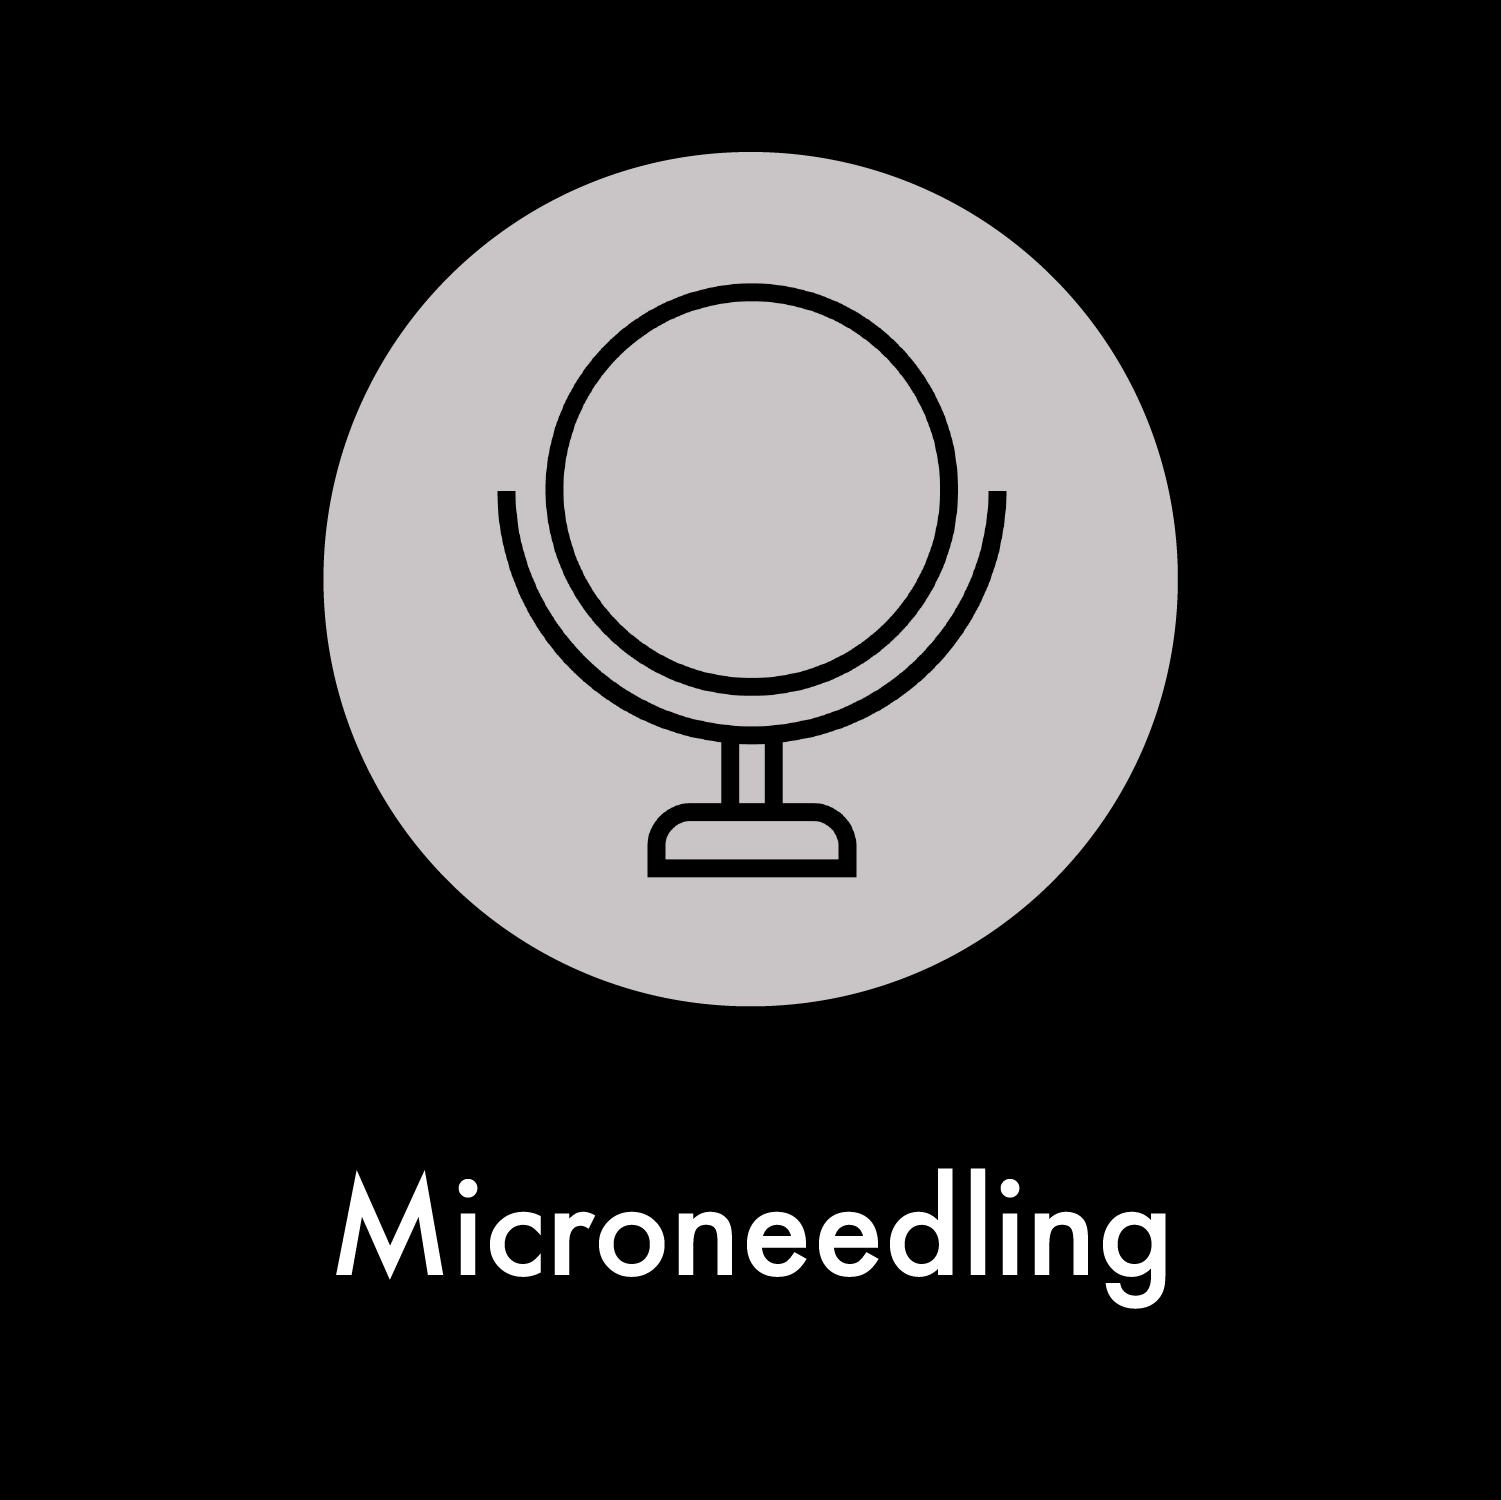 Facebar icons_Microneedling.png